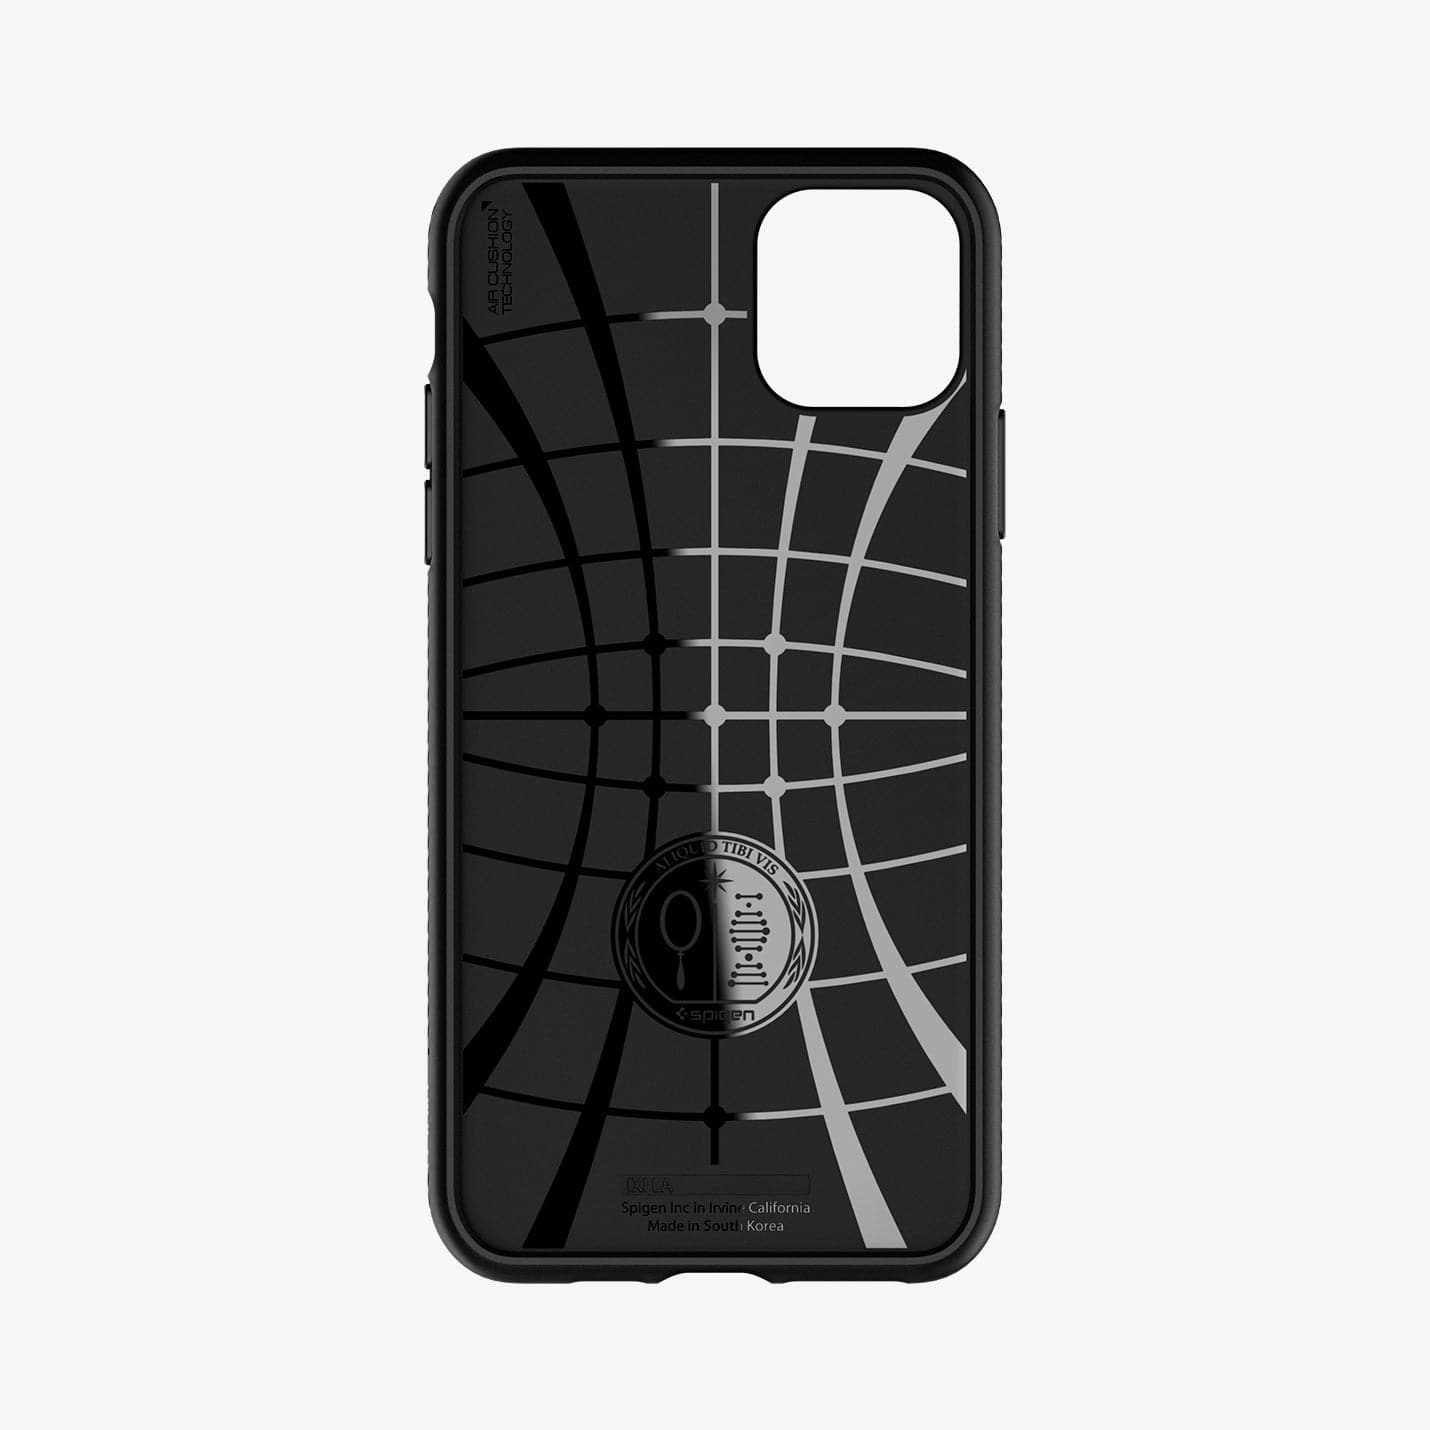 075CS27134 - iPhone 11 Pro Max Case Liquid Air in matte black showing the inside of case